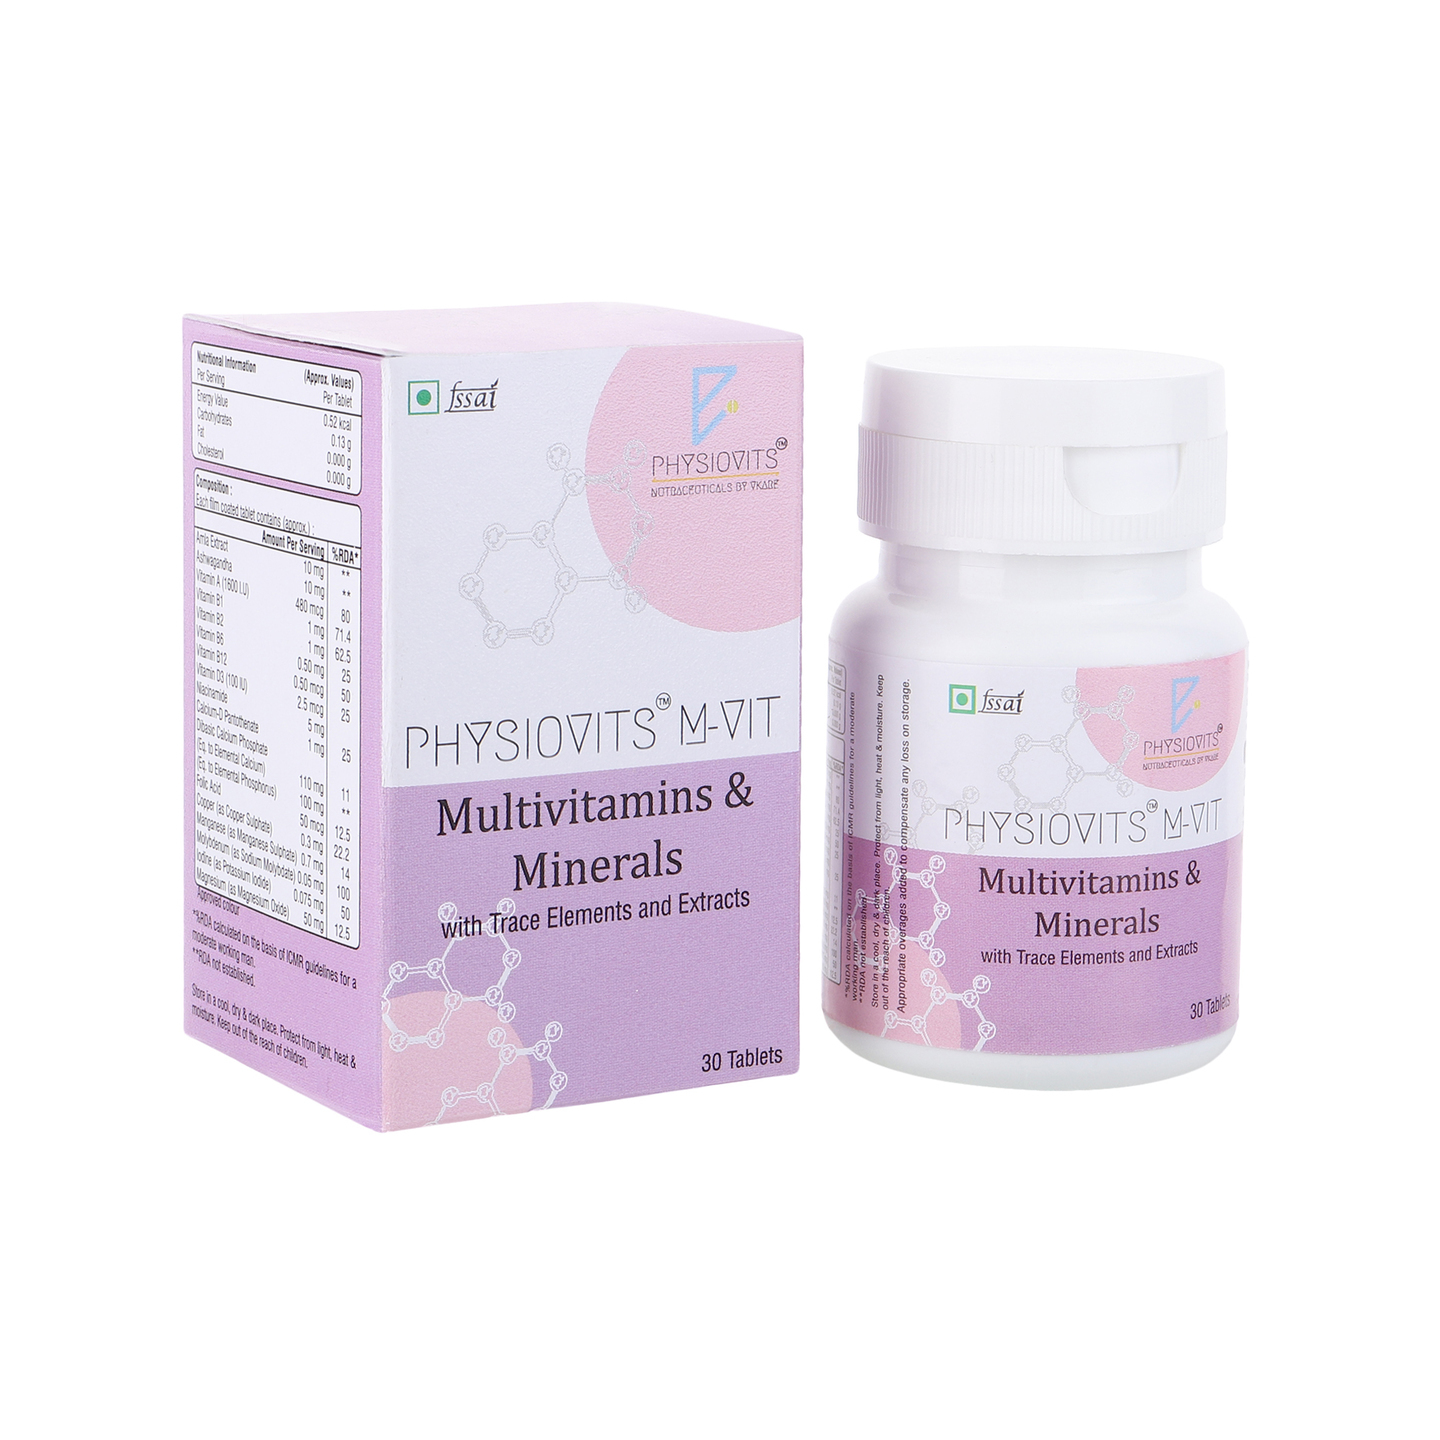 M-VIT Multivitamins, Minerals & Trace Elements - Box of 30 Capsules